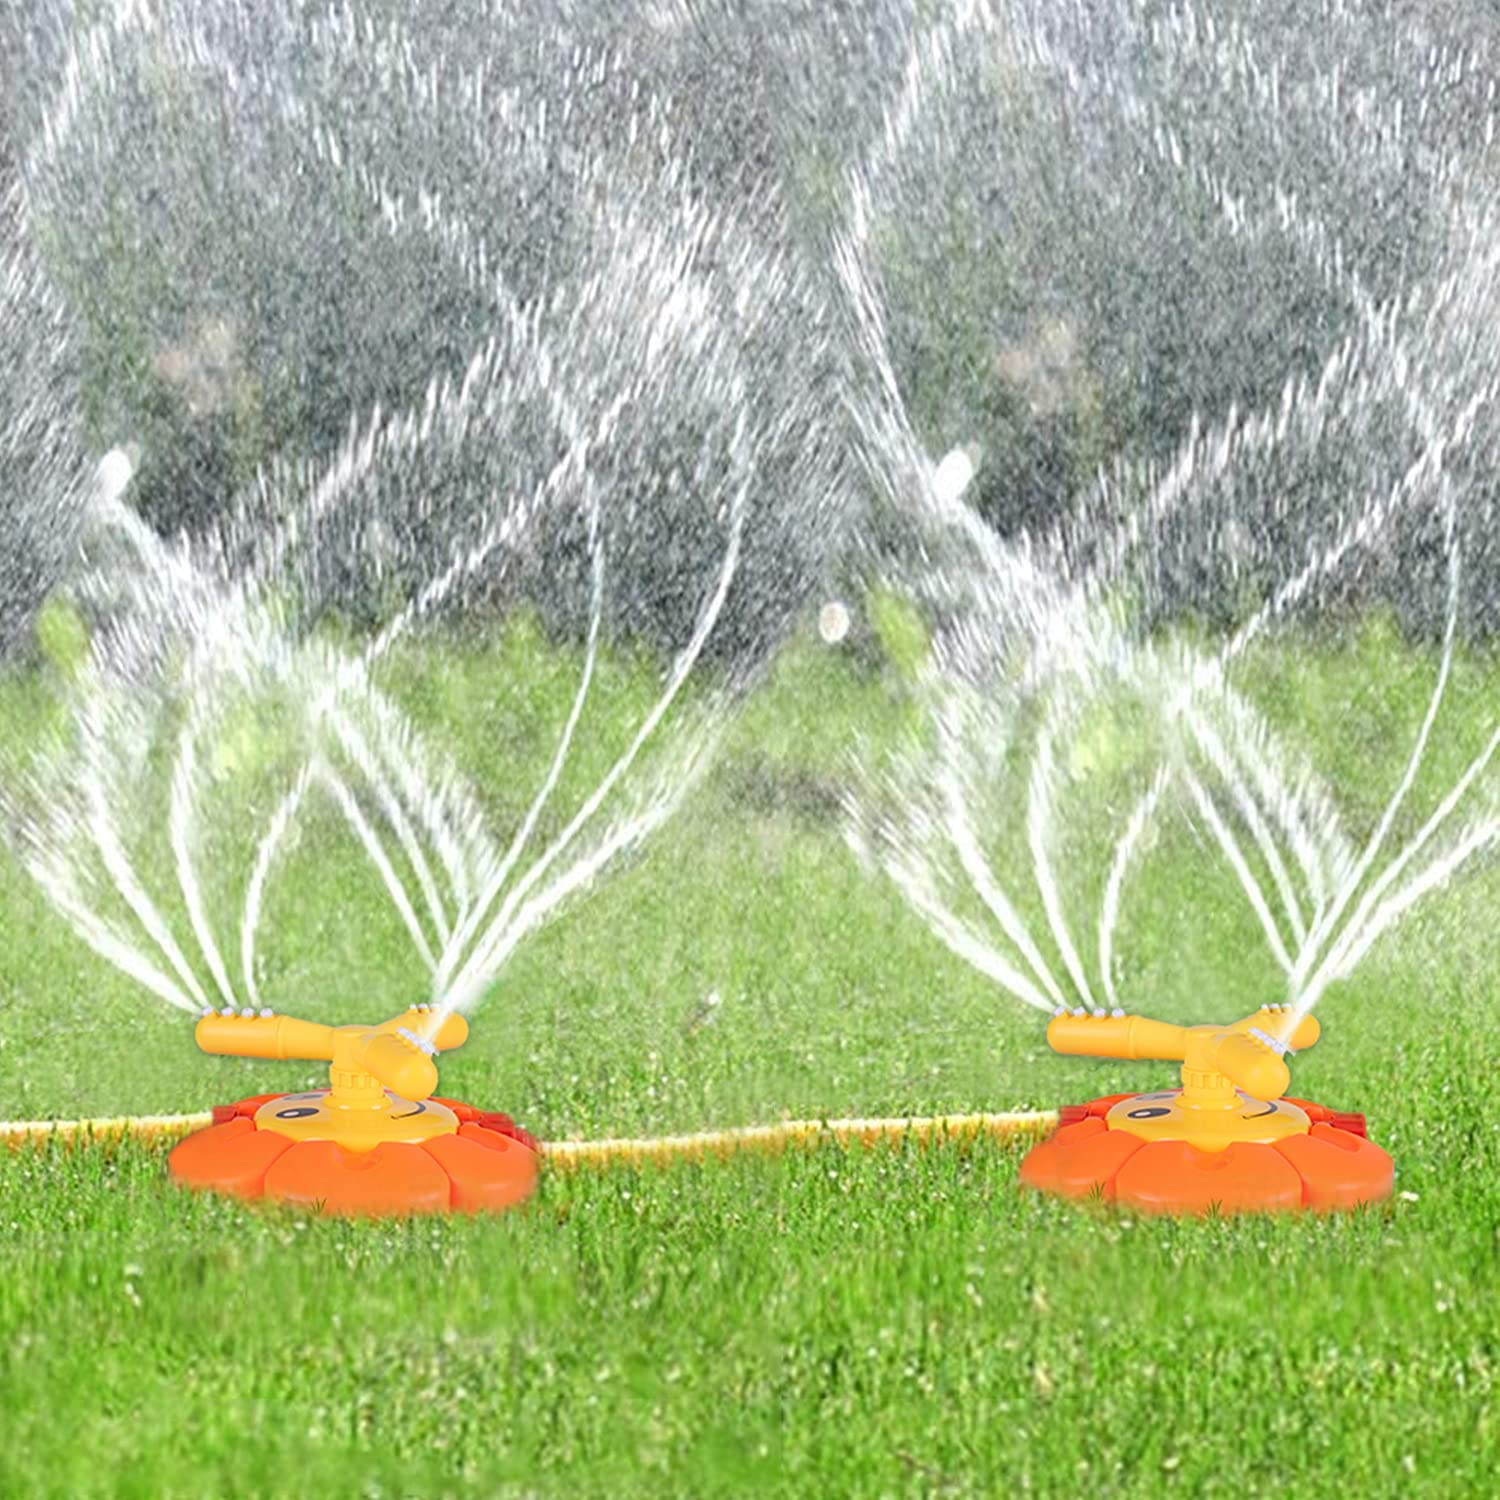 Navy Kids Sprinkler Fire Hydrant Splash All Summer Long Attach Water Sprinkler for Kids to Garden Hose for Backyard Fun Sprays Up to 8 Ft. 